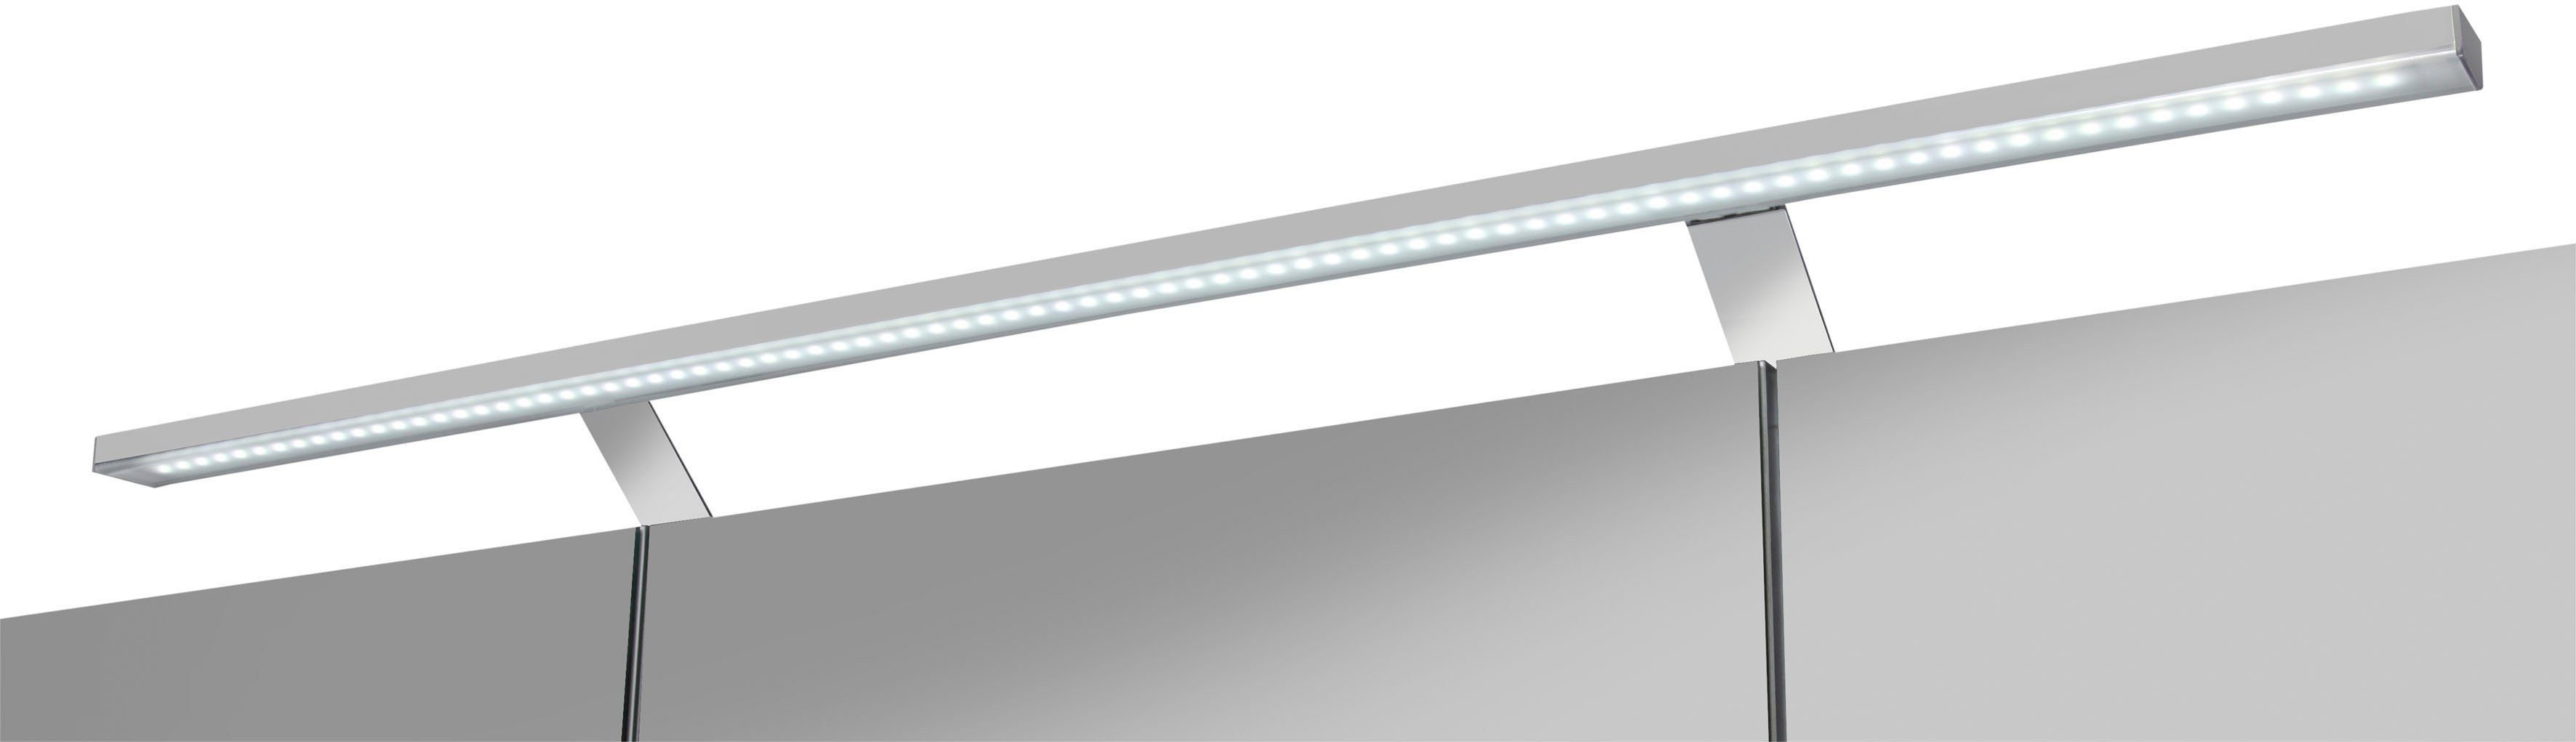 welltime Torino 3-türig, kreideweiß kreideweiß Breite | 100 Spiegelschrank cm, LED-Beleuchtung, Schalter-/Steckdosenbox